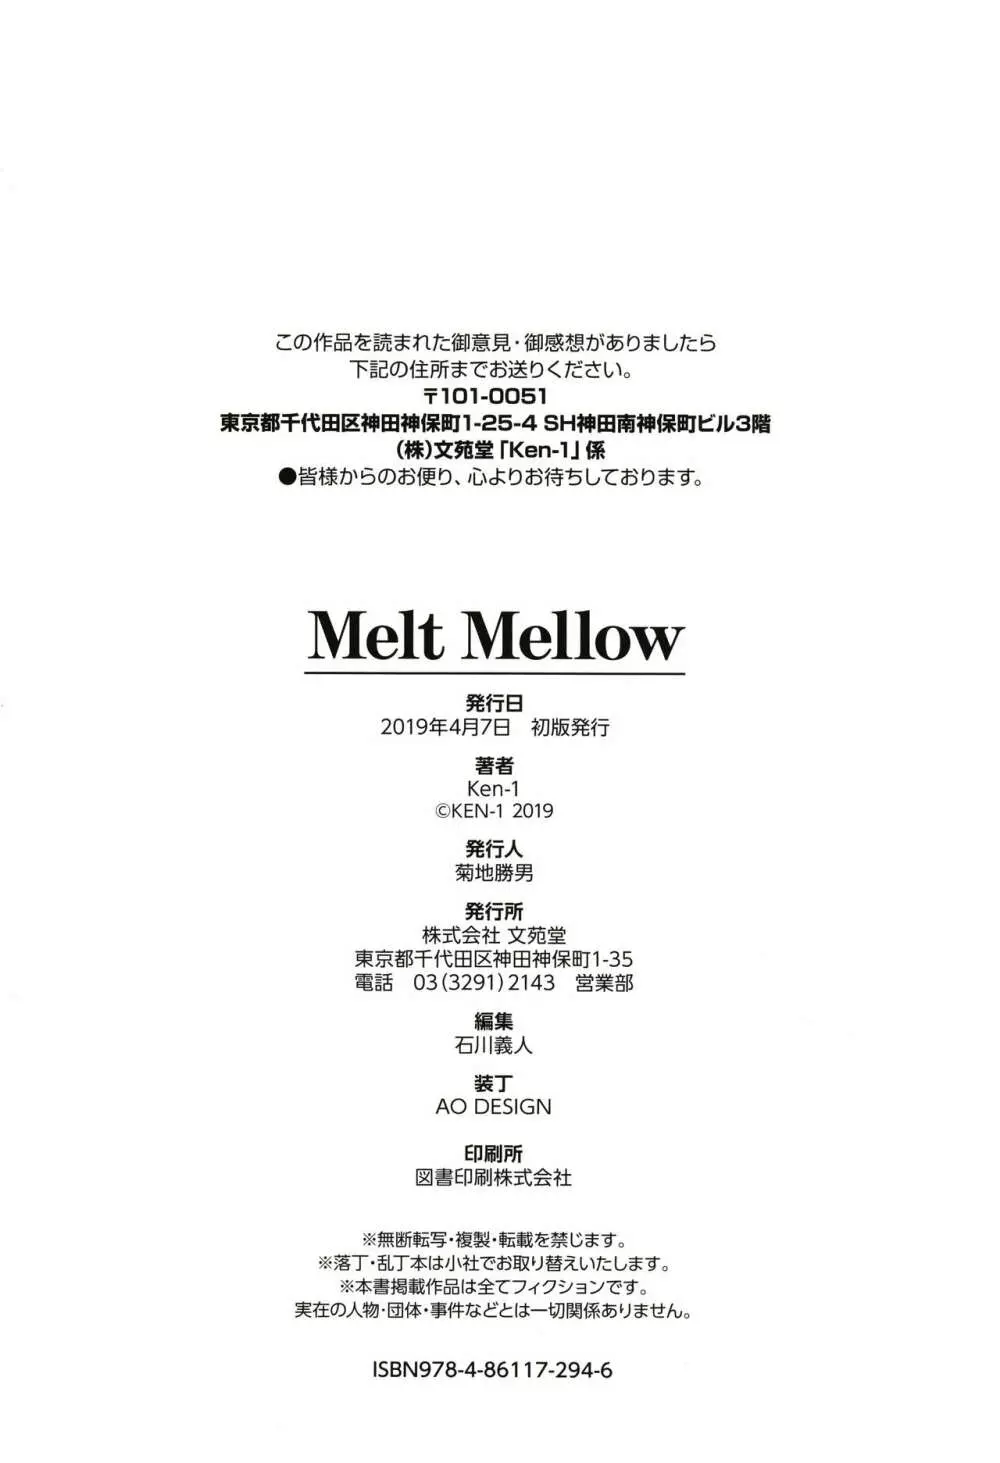 Melt Mellow + 4Pリーフレット 99ページ